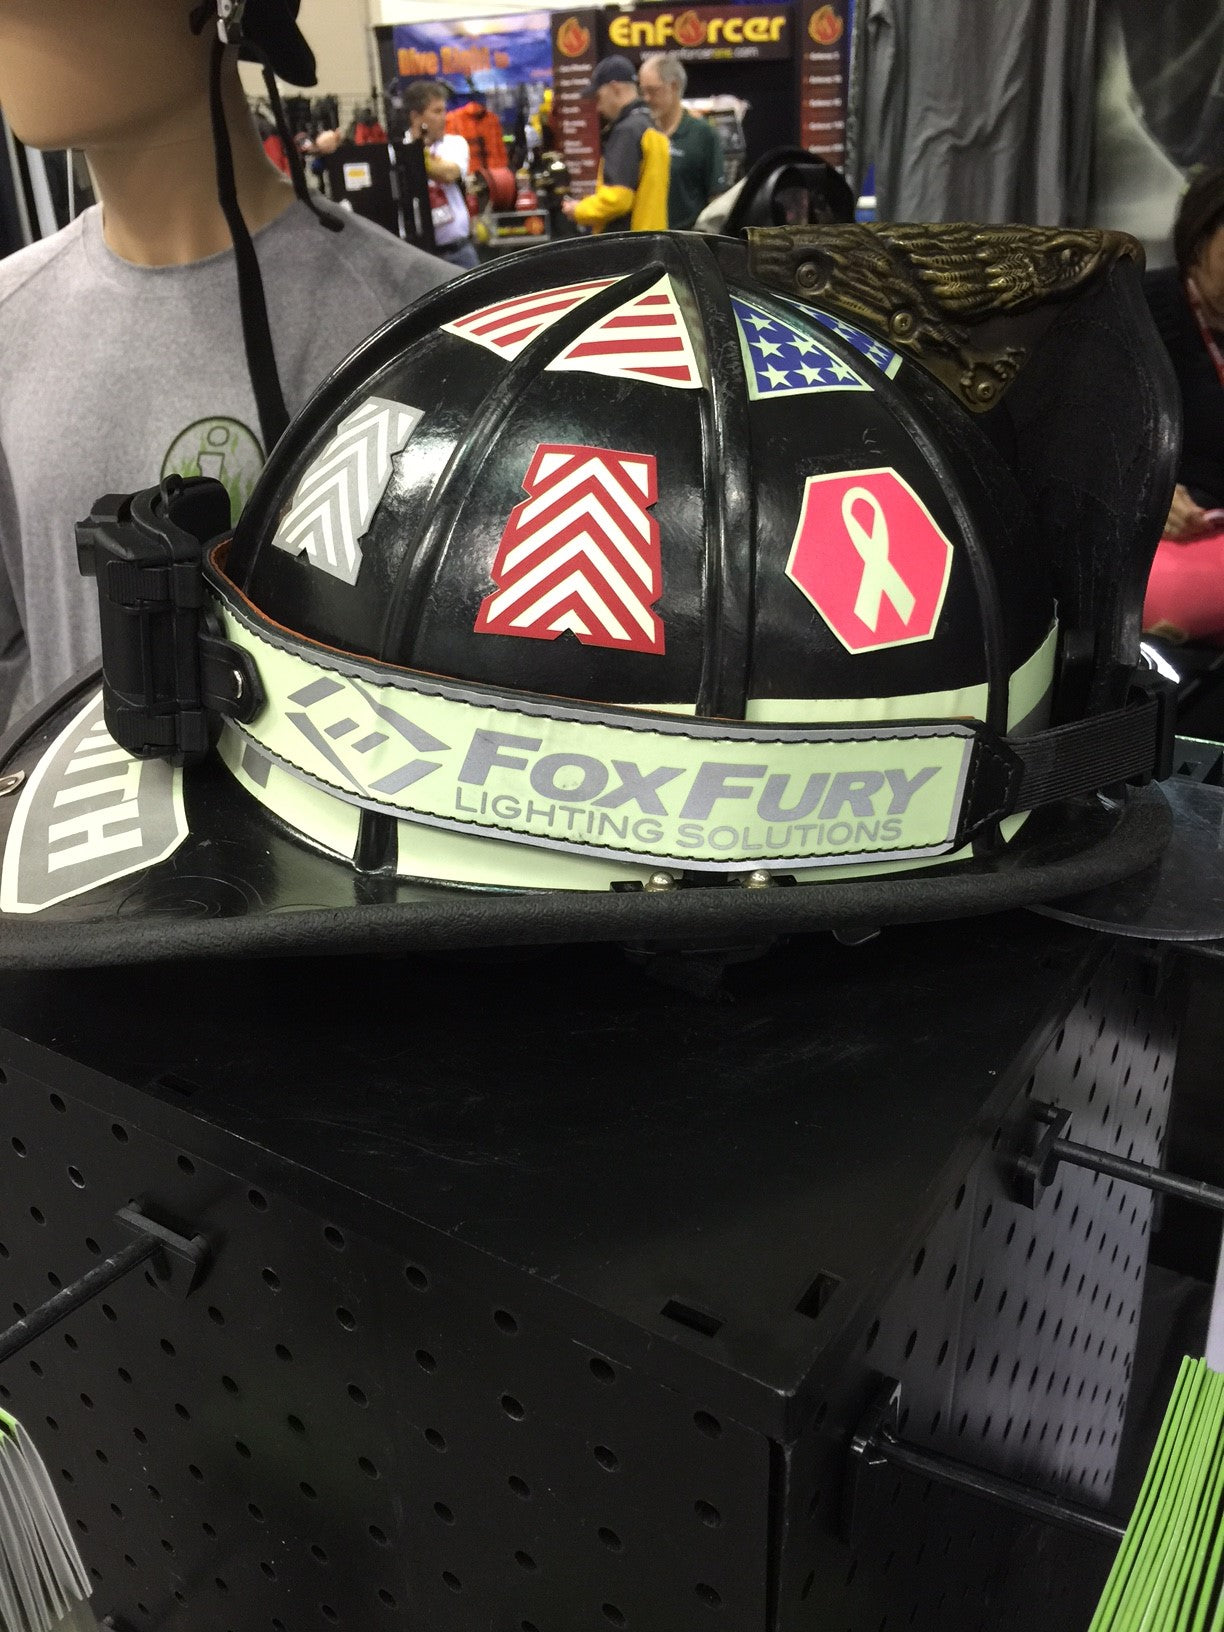 IdentiFire™ Helmet Band w/ FoxFury Light